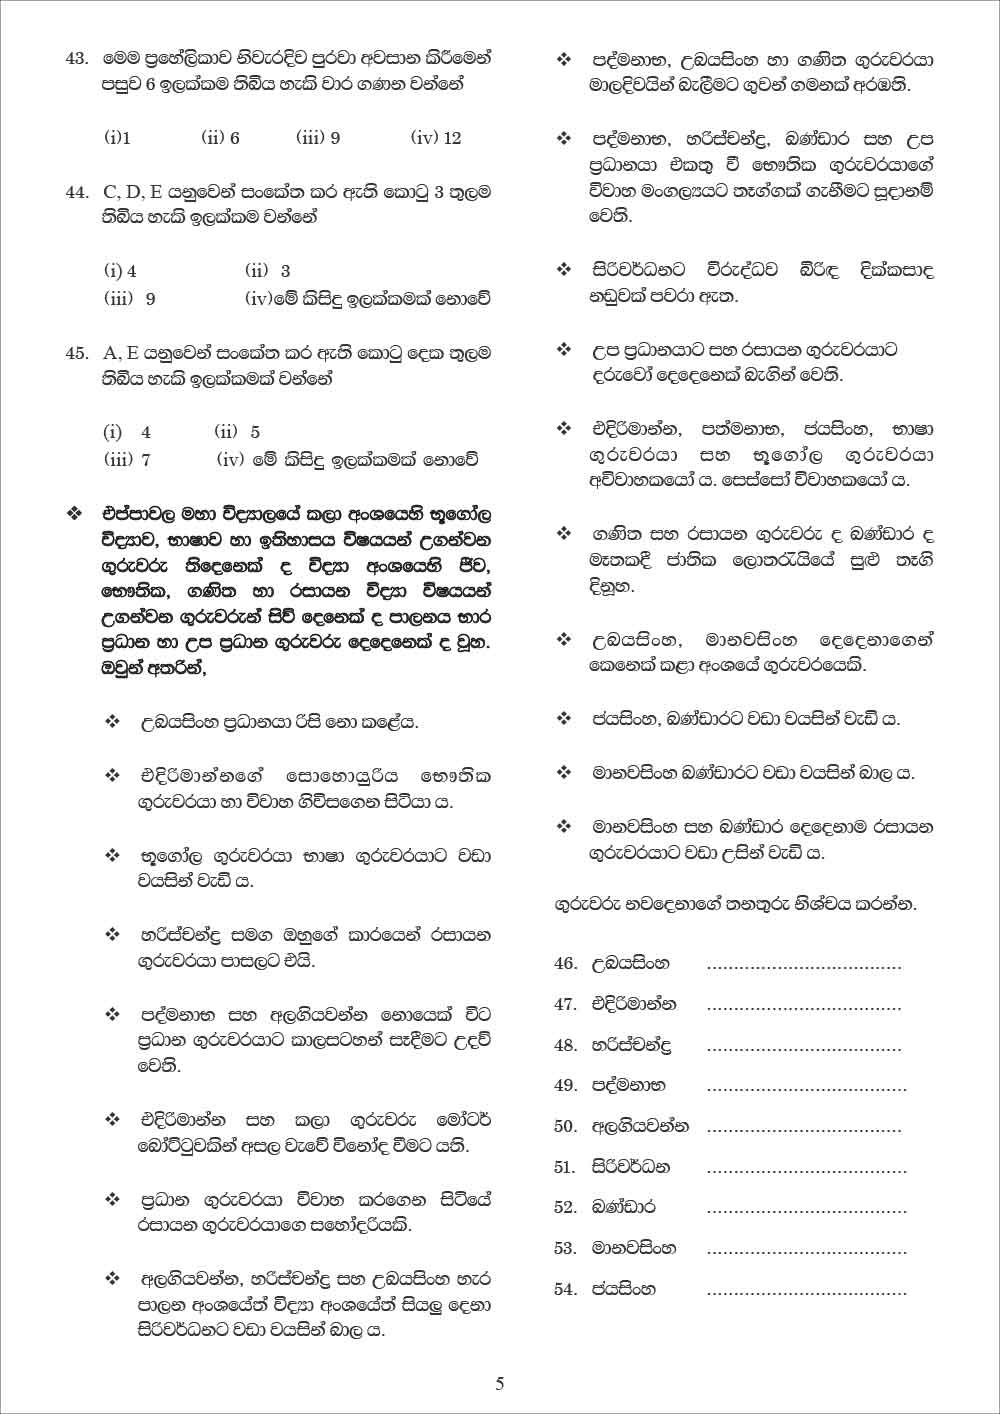 SLAS Pass Paper 03 by Anusha Gokula - General Knowledge in Sinhala